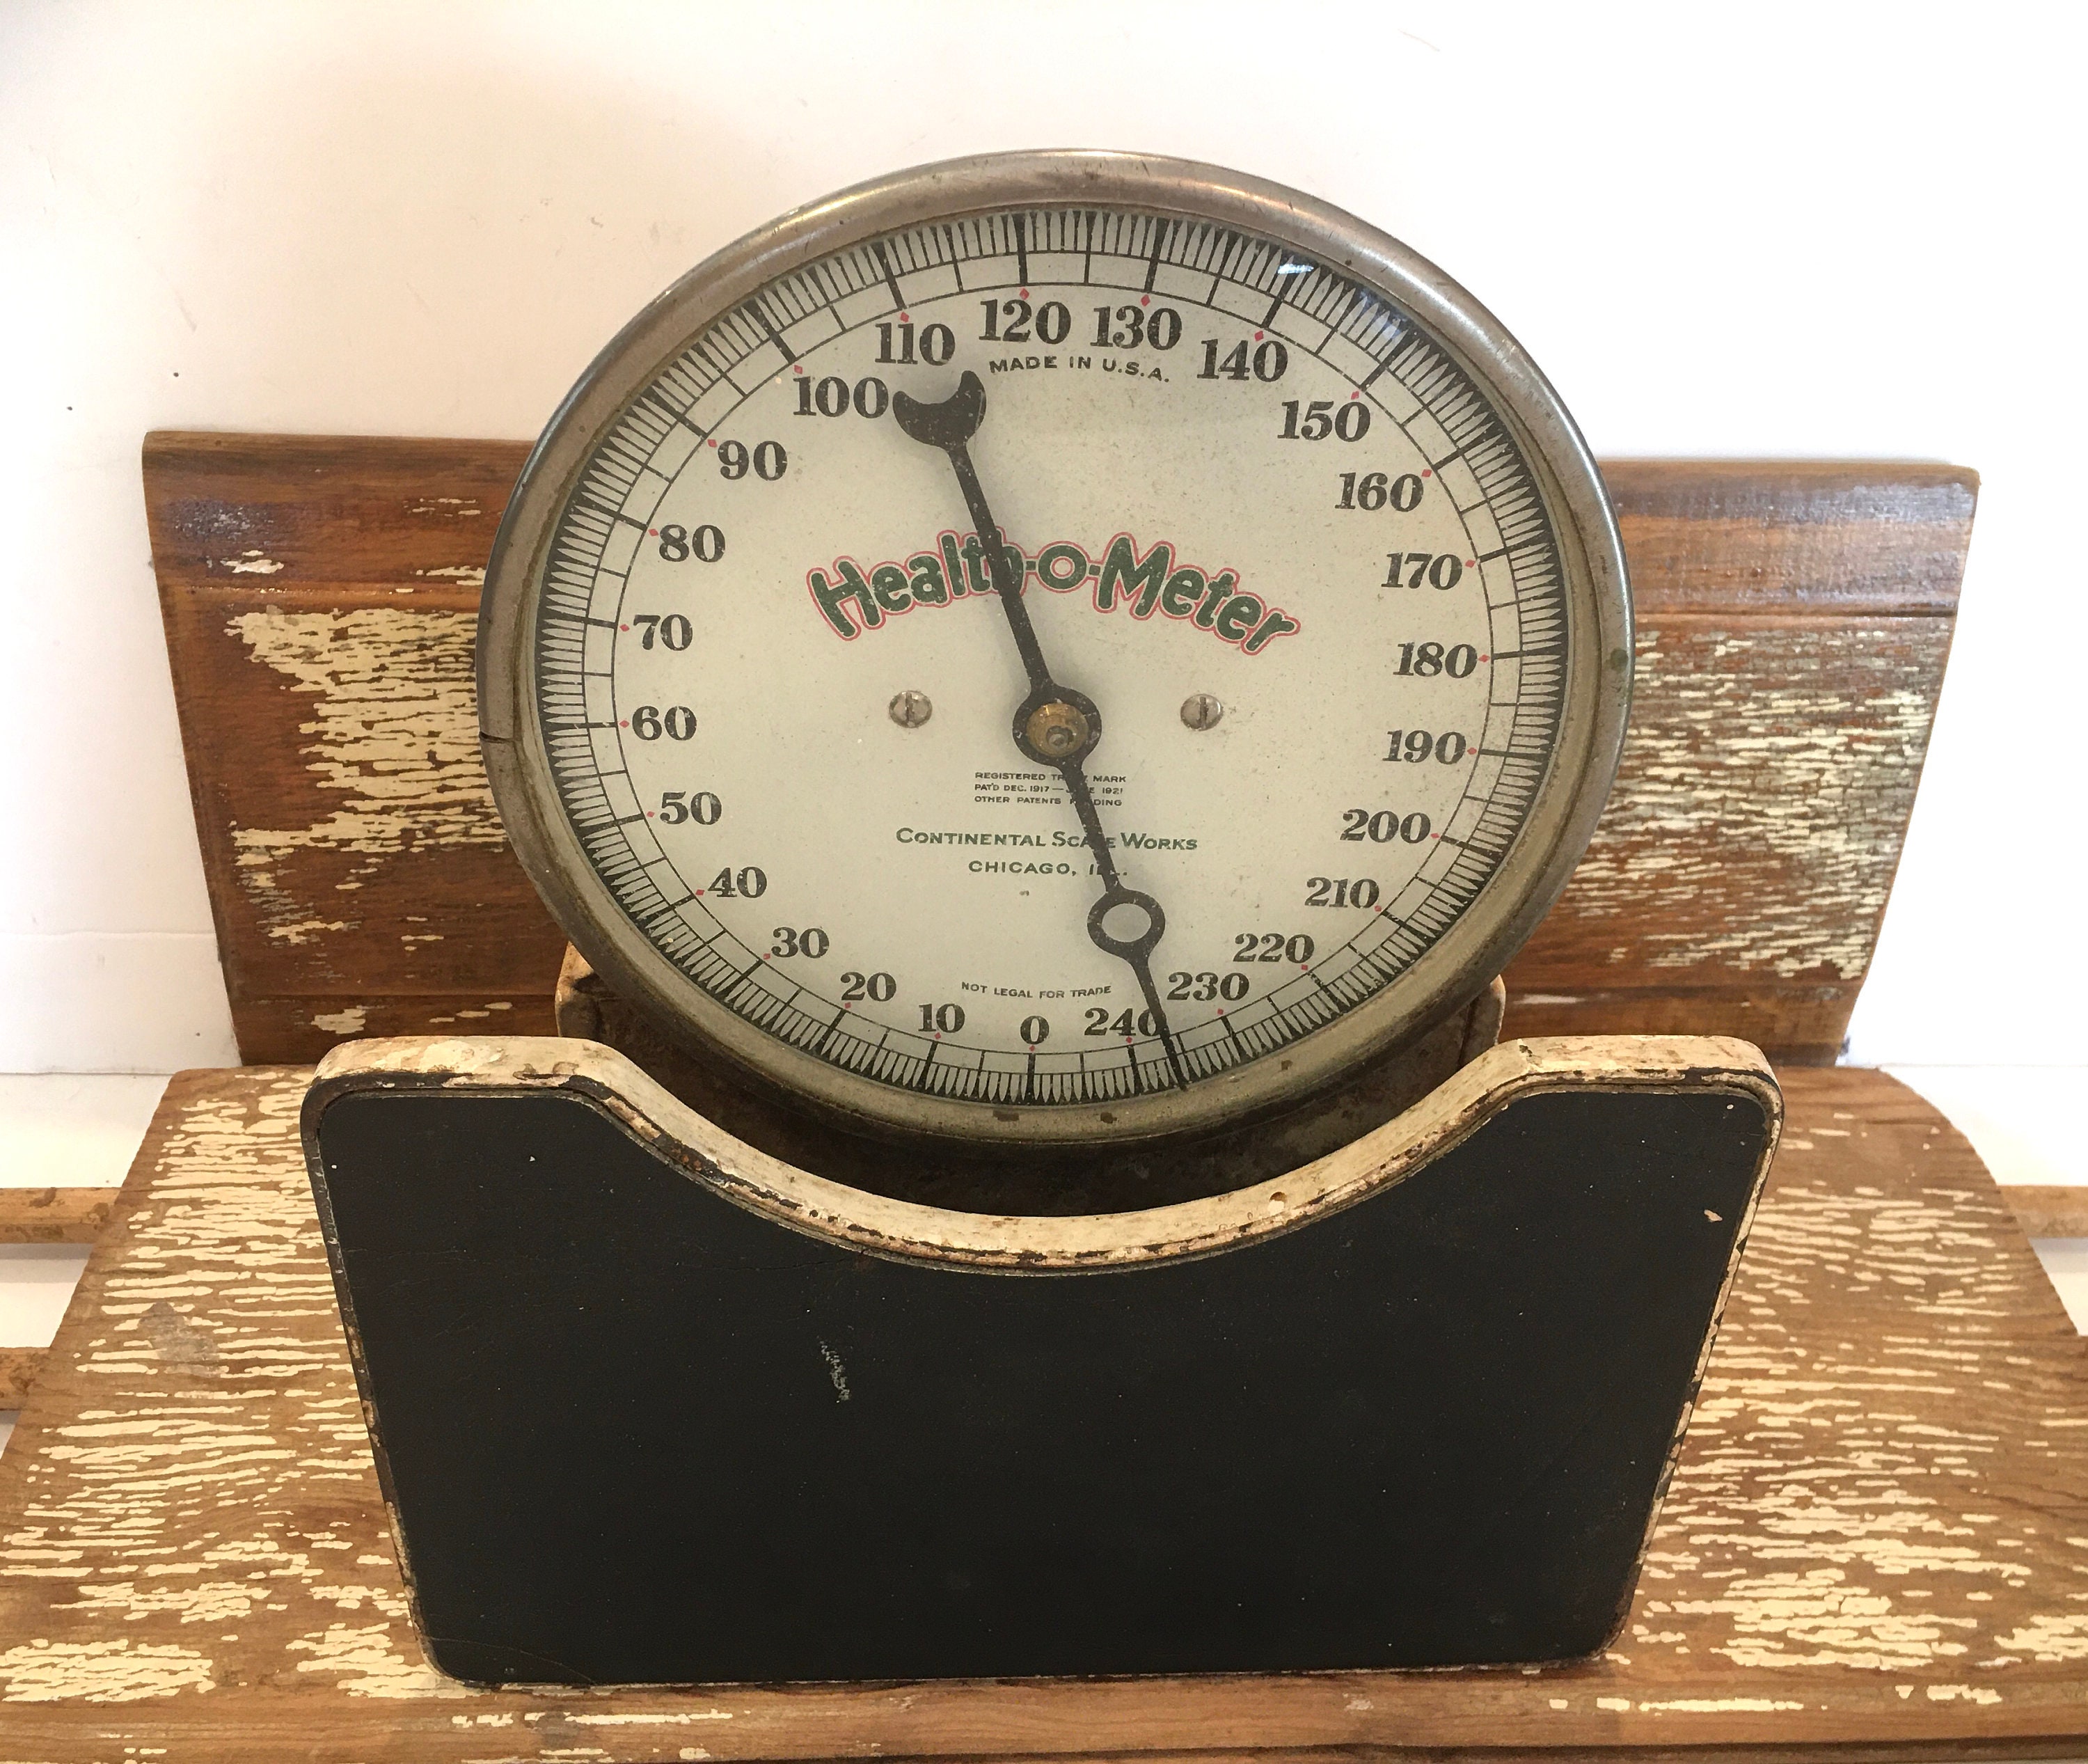 Bathroom Scale, Vintage Bathroom Scale, Health O Meter, Mid Century Scale,  Marble Beige Oval 